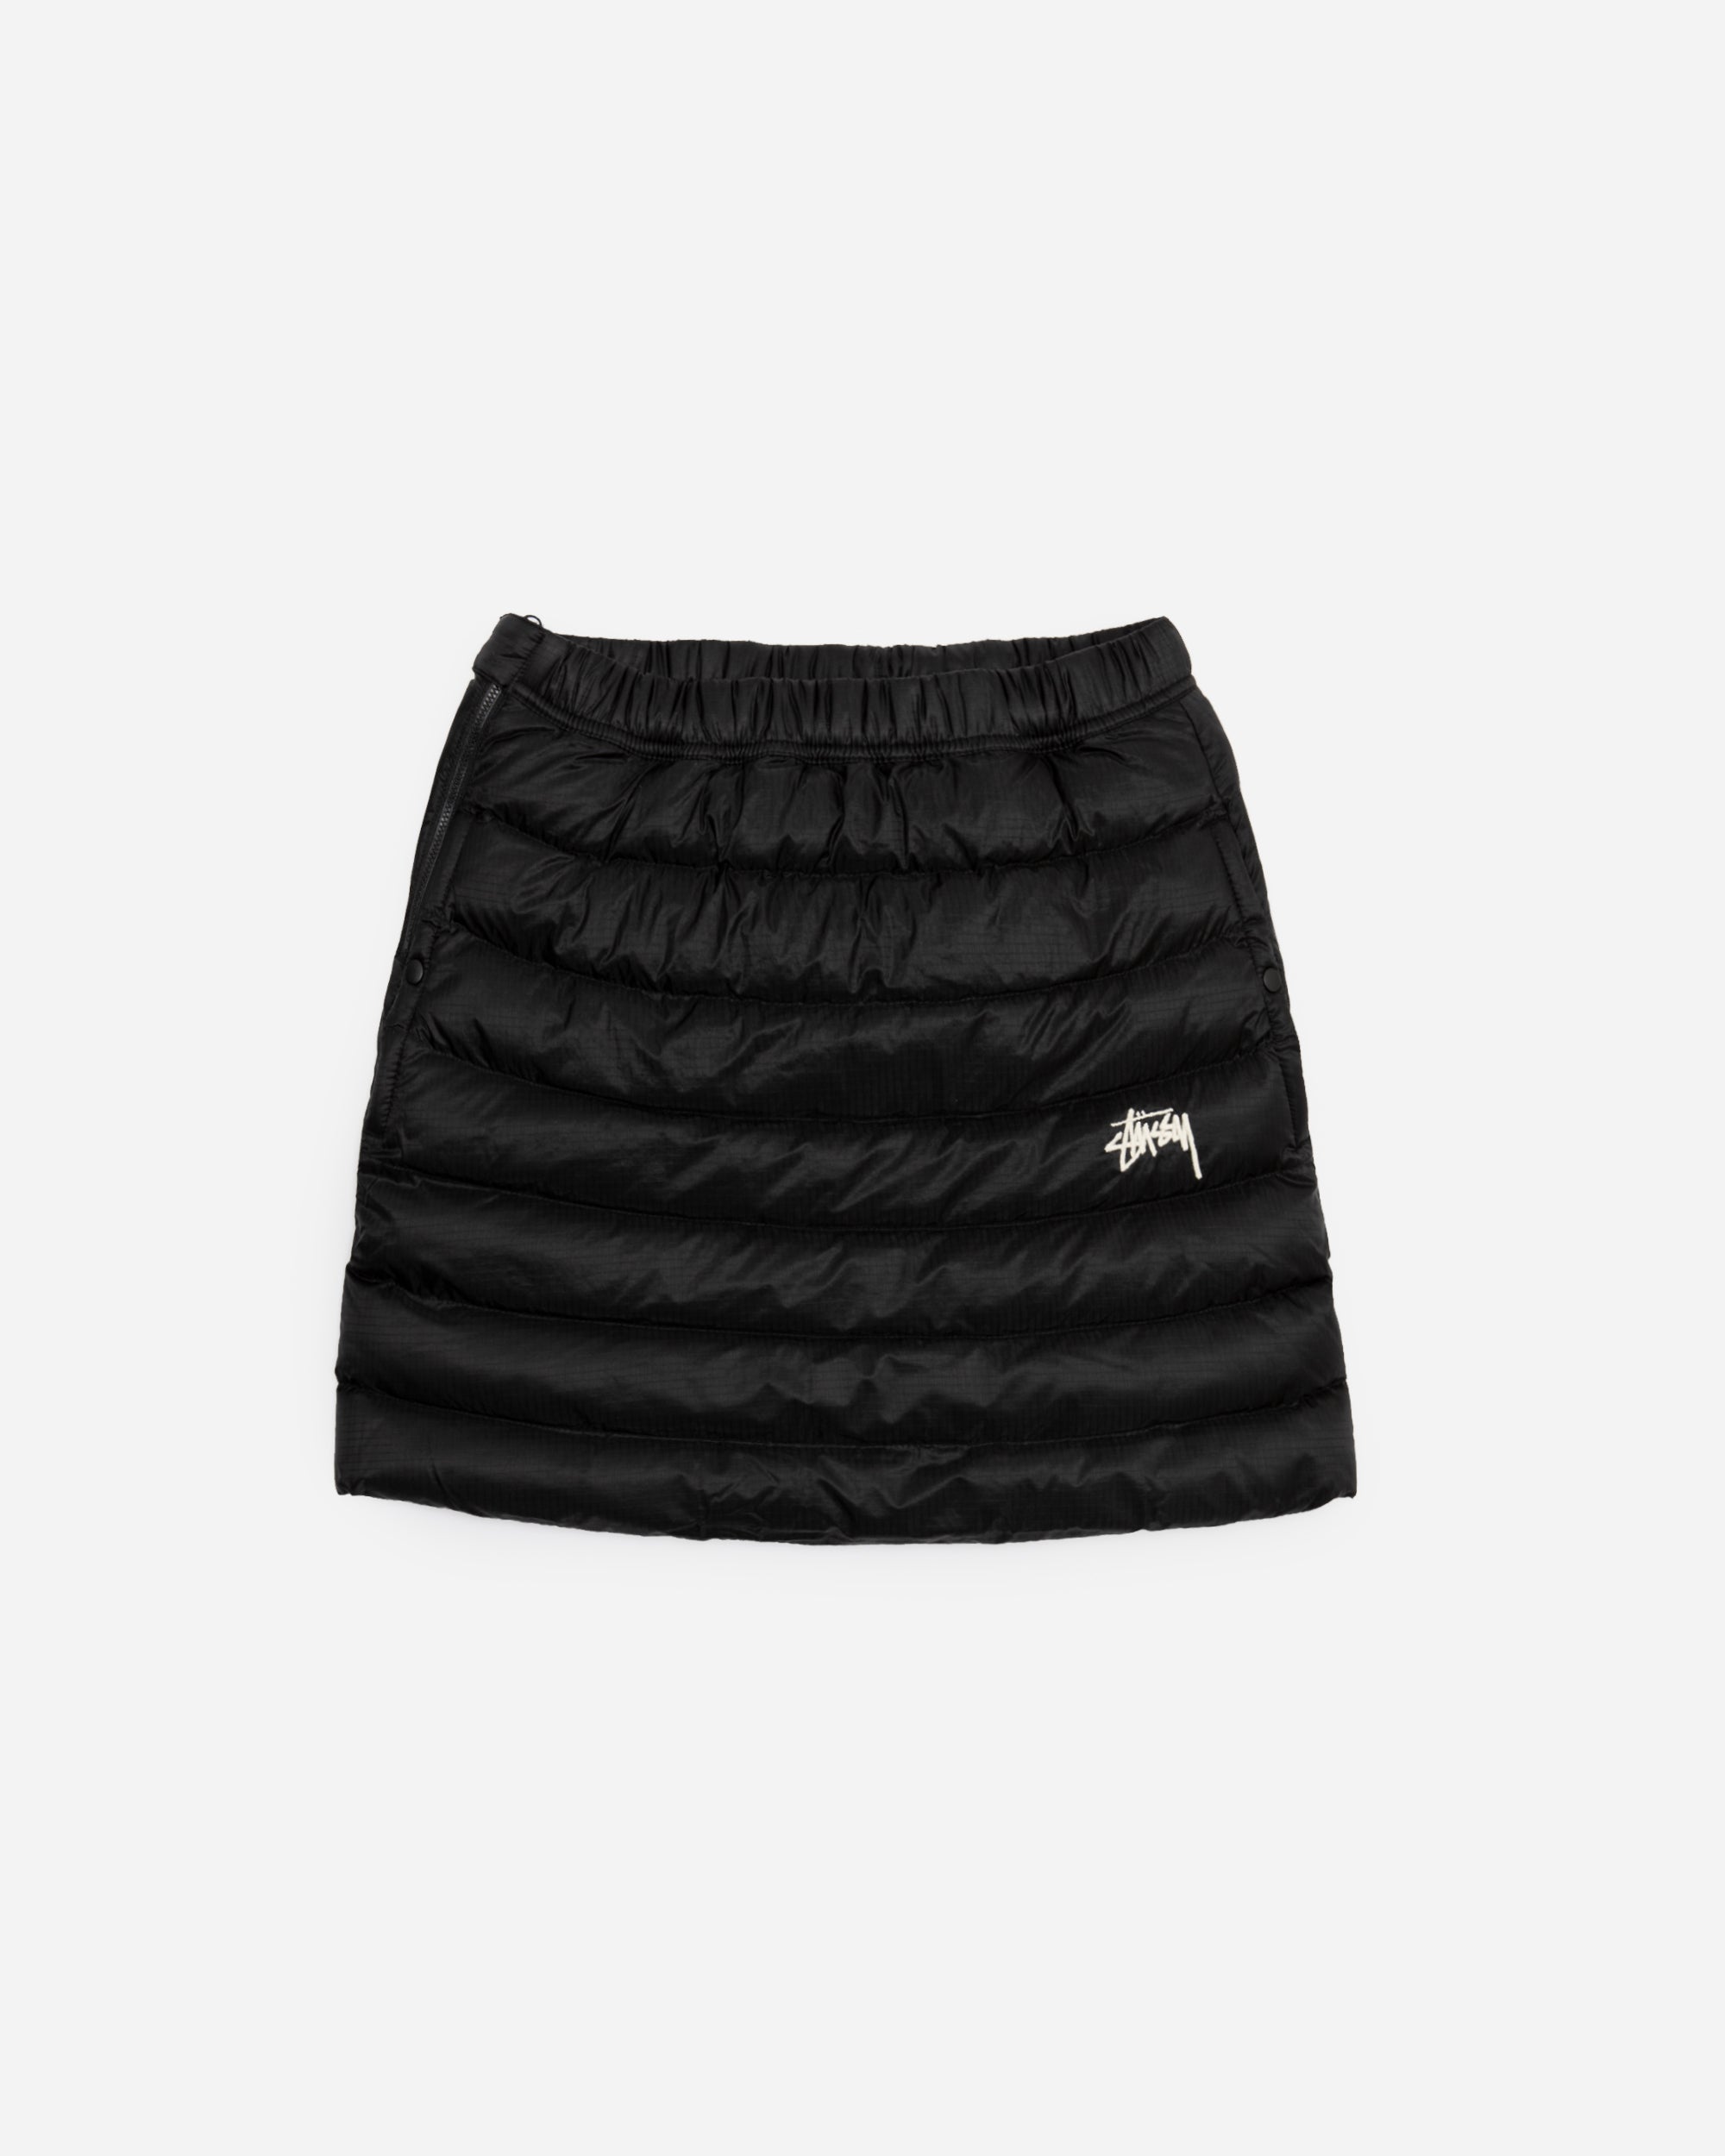 Nike x Stussy NRG Insulated Skirt